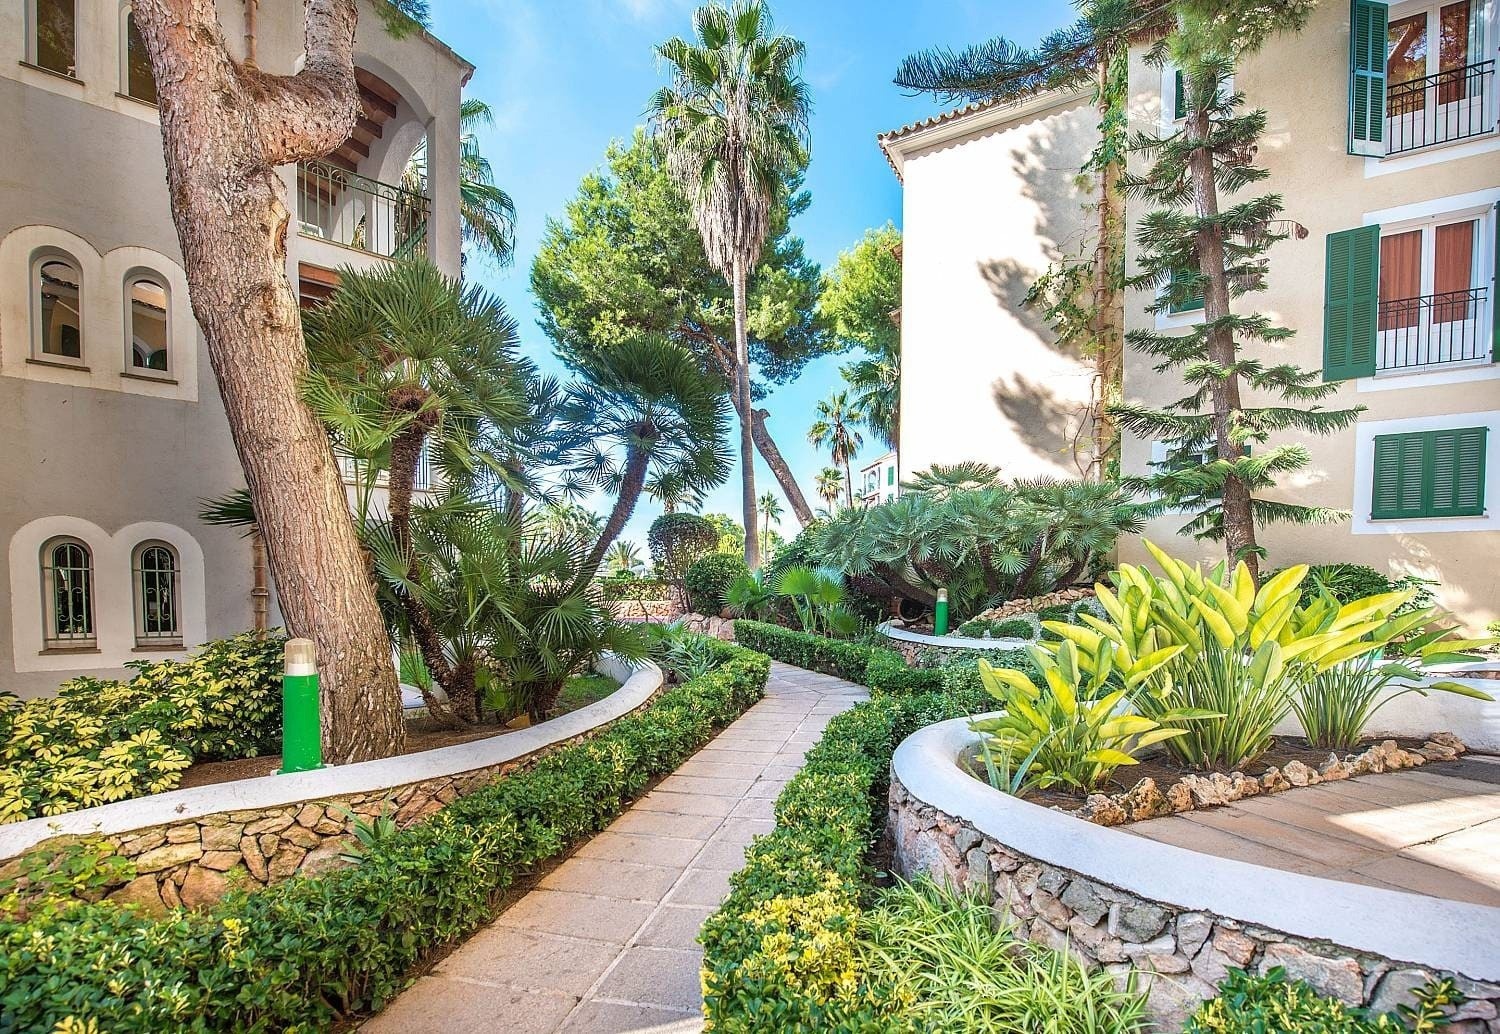 Path through the gardens of the Ona Cala Pi hotel, in Majorca